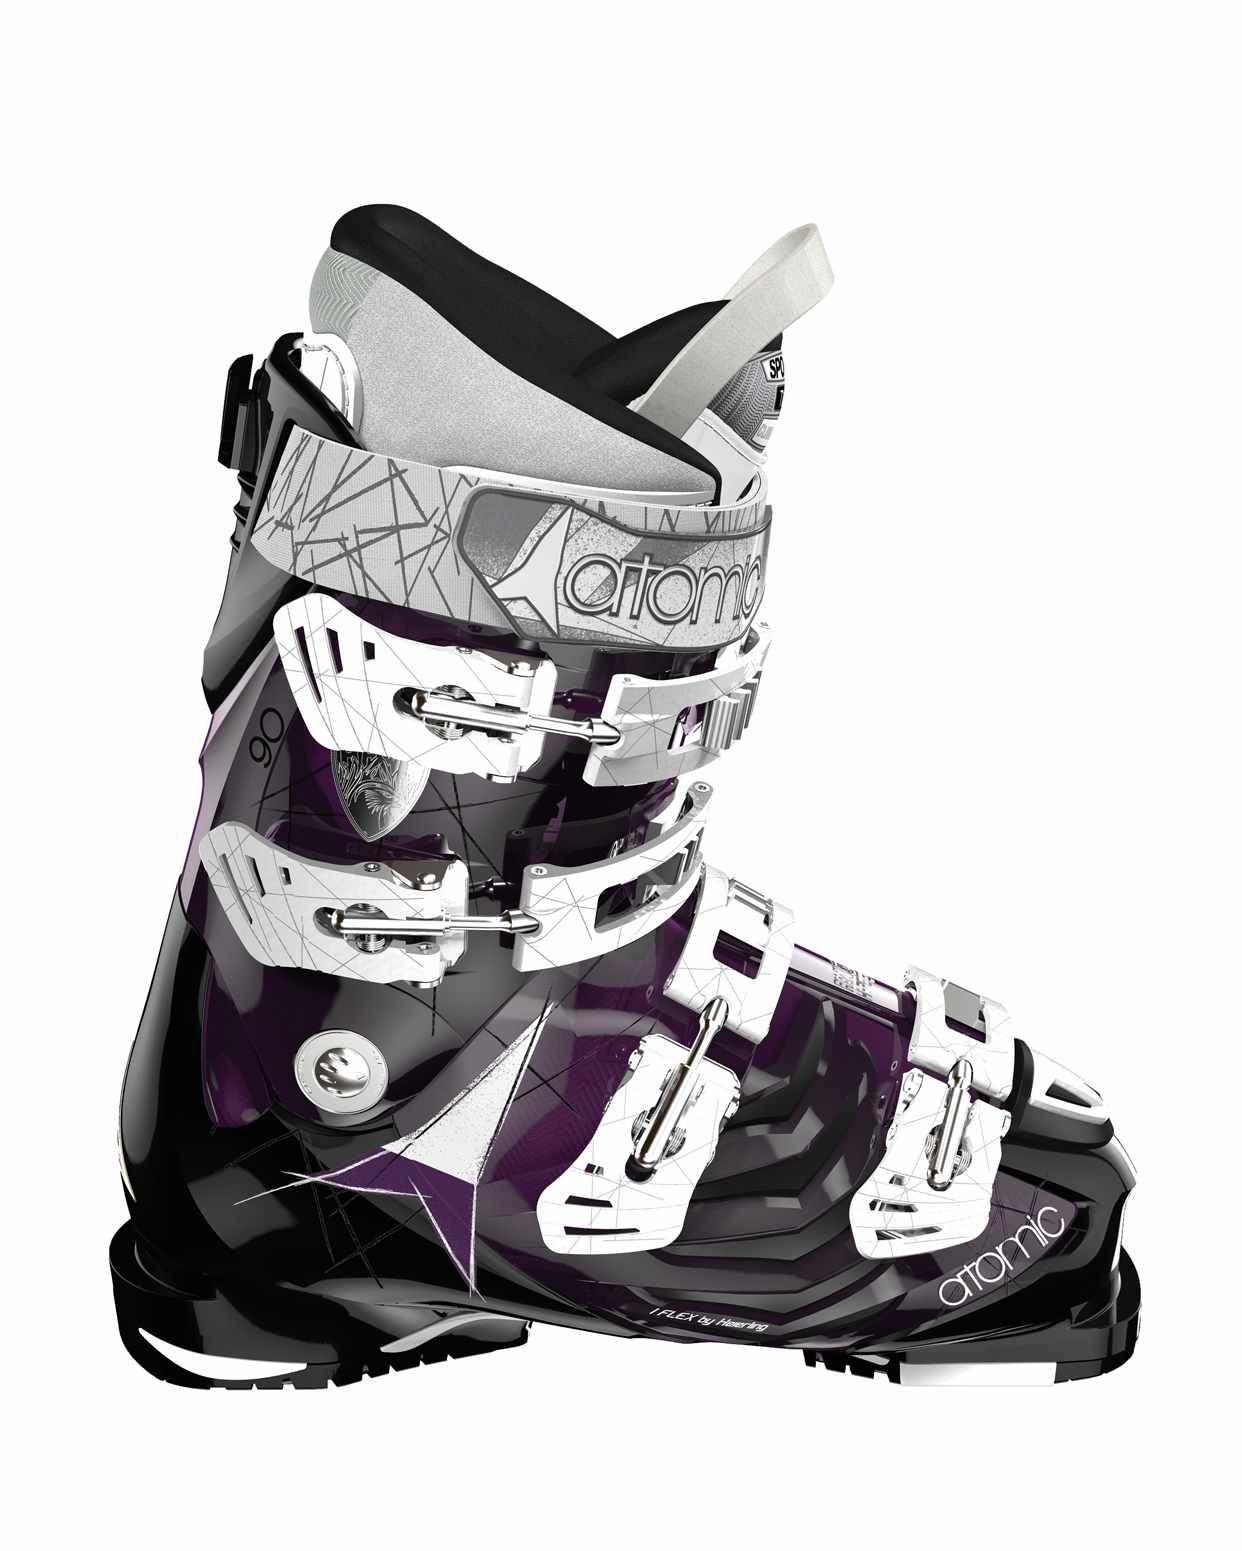 Atomic m90 Ski Boots Womens-Black/White Special Price New 